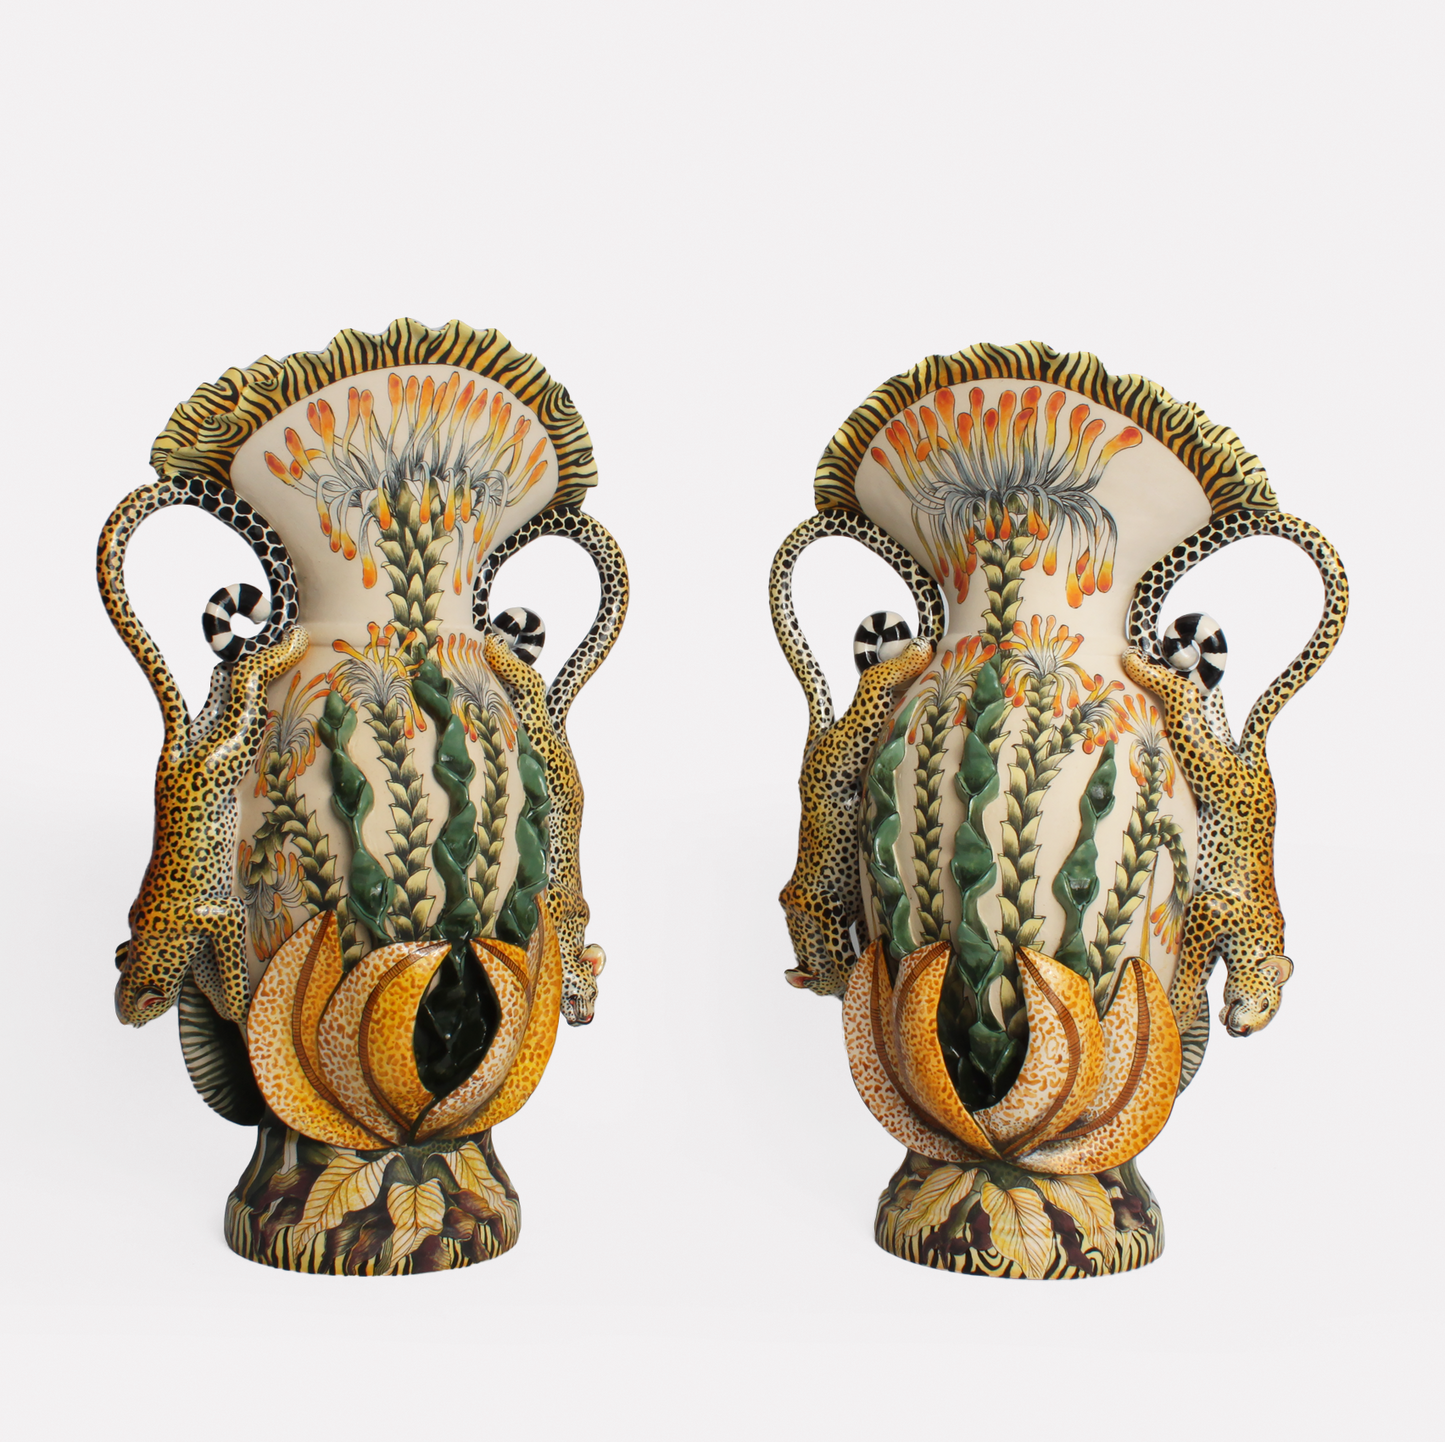 Leopard Vases